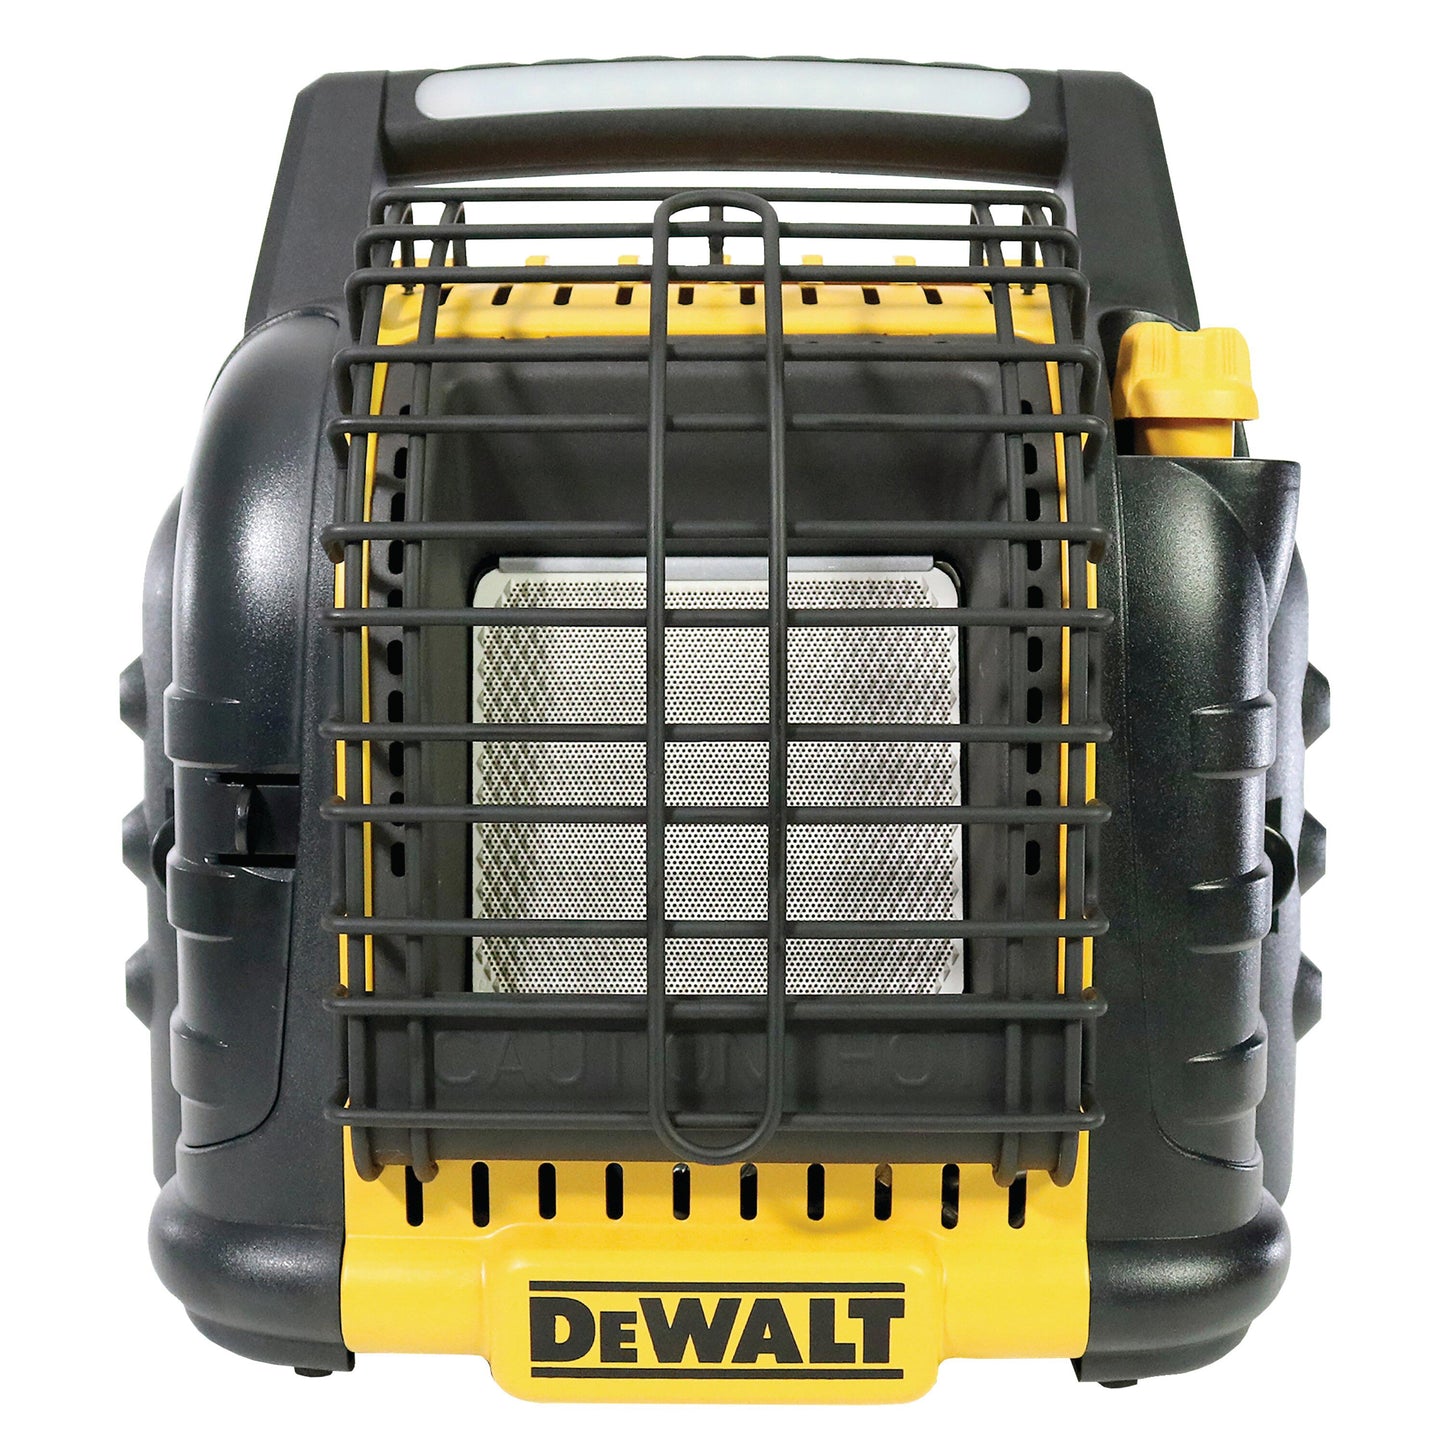 Mr. Heater F332000 DXH12B Dewalt 12,000 BTU Cordless Portable Propane Radiant Heater